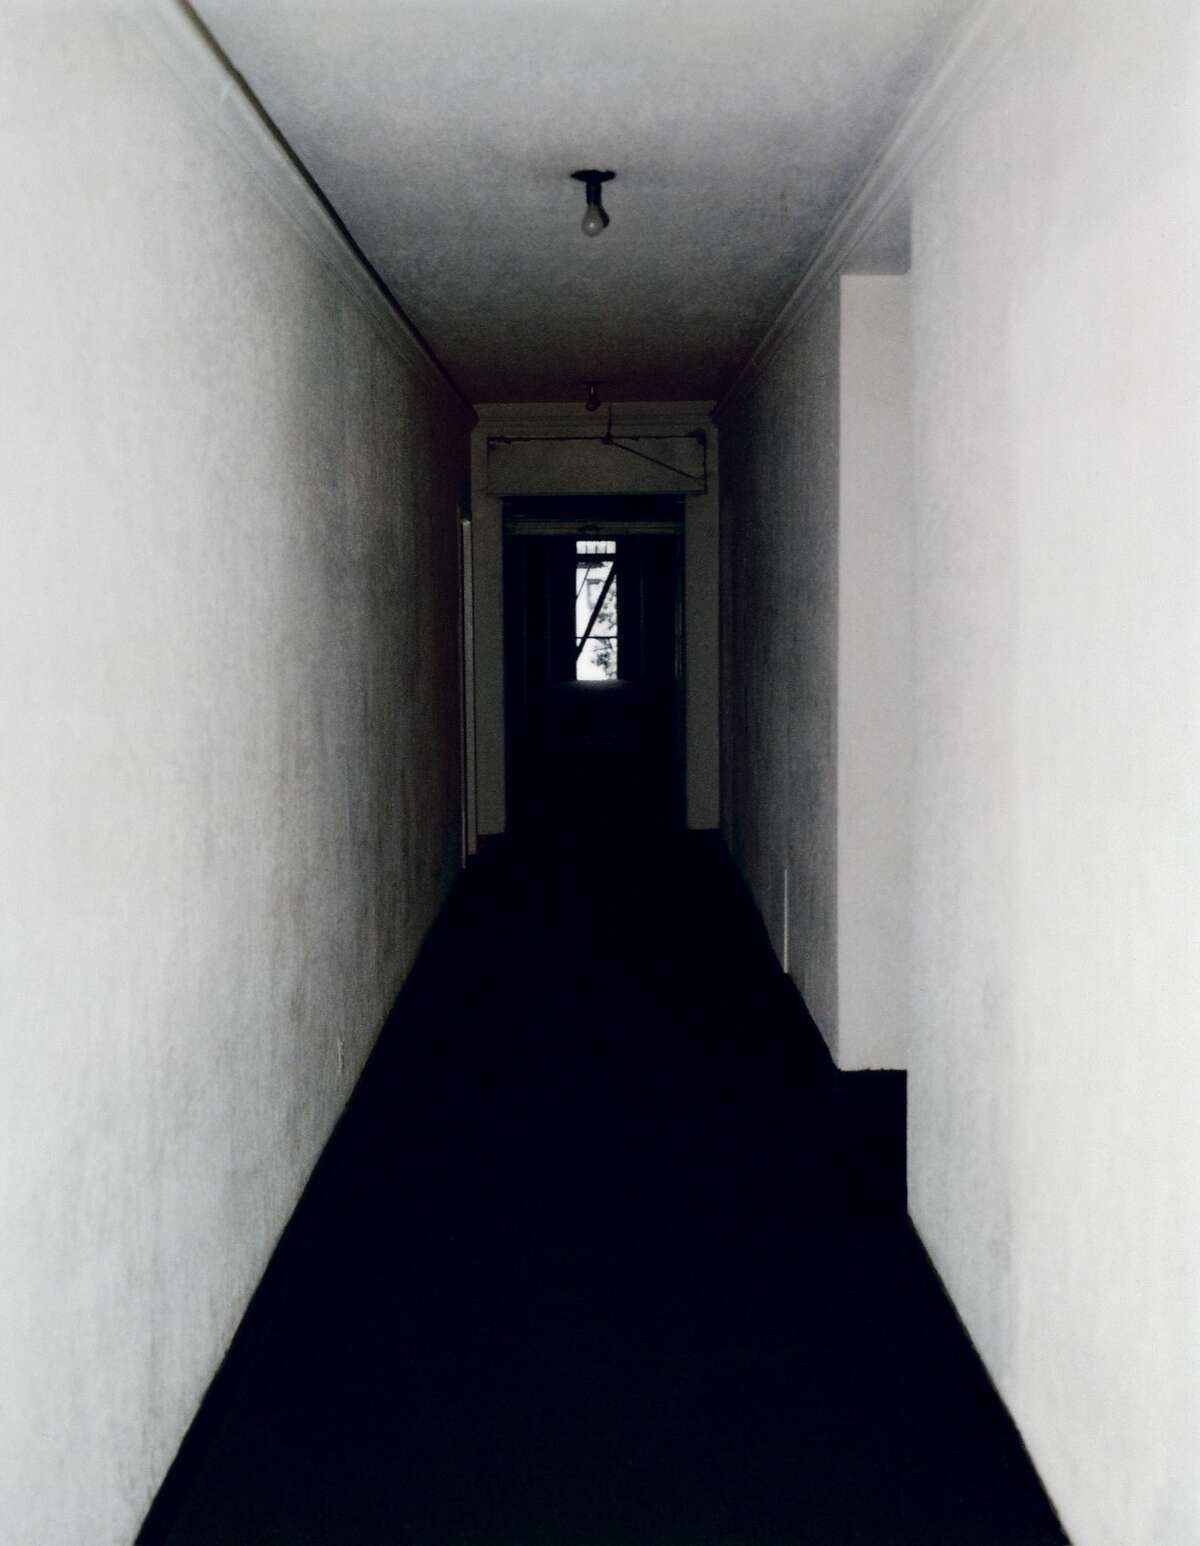 Steve Kahn, Corridors, 1980-2014Pigment print30 x 24 inches Edition 1/3